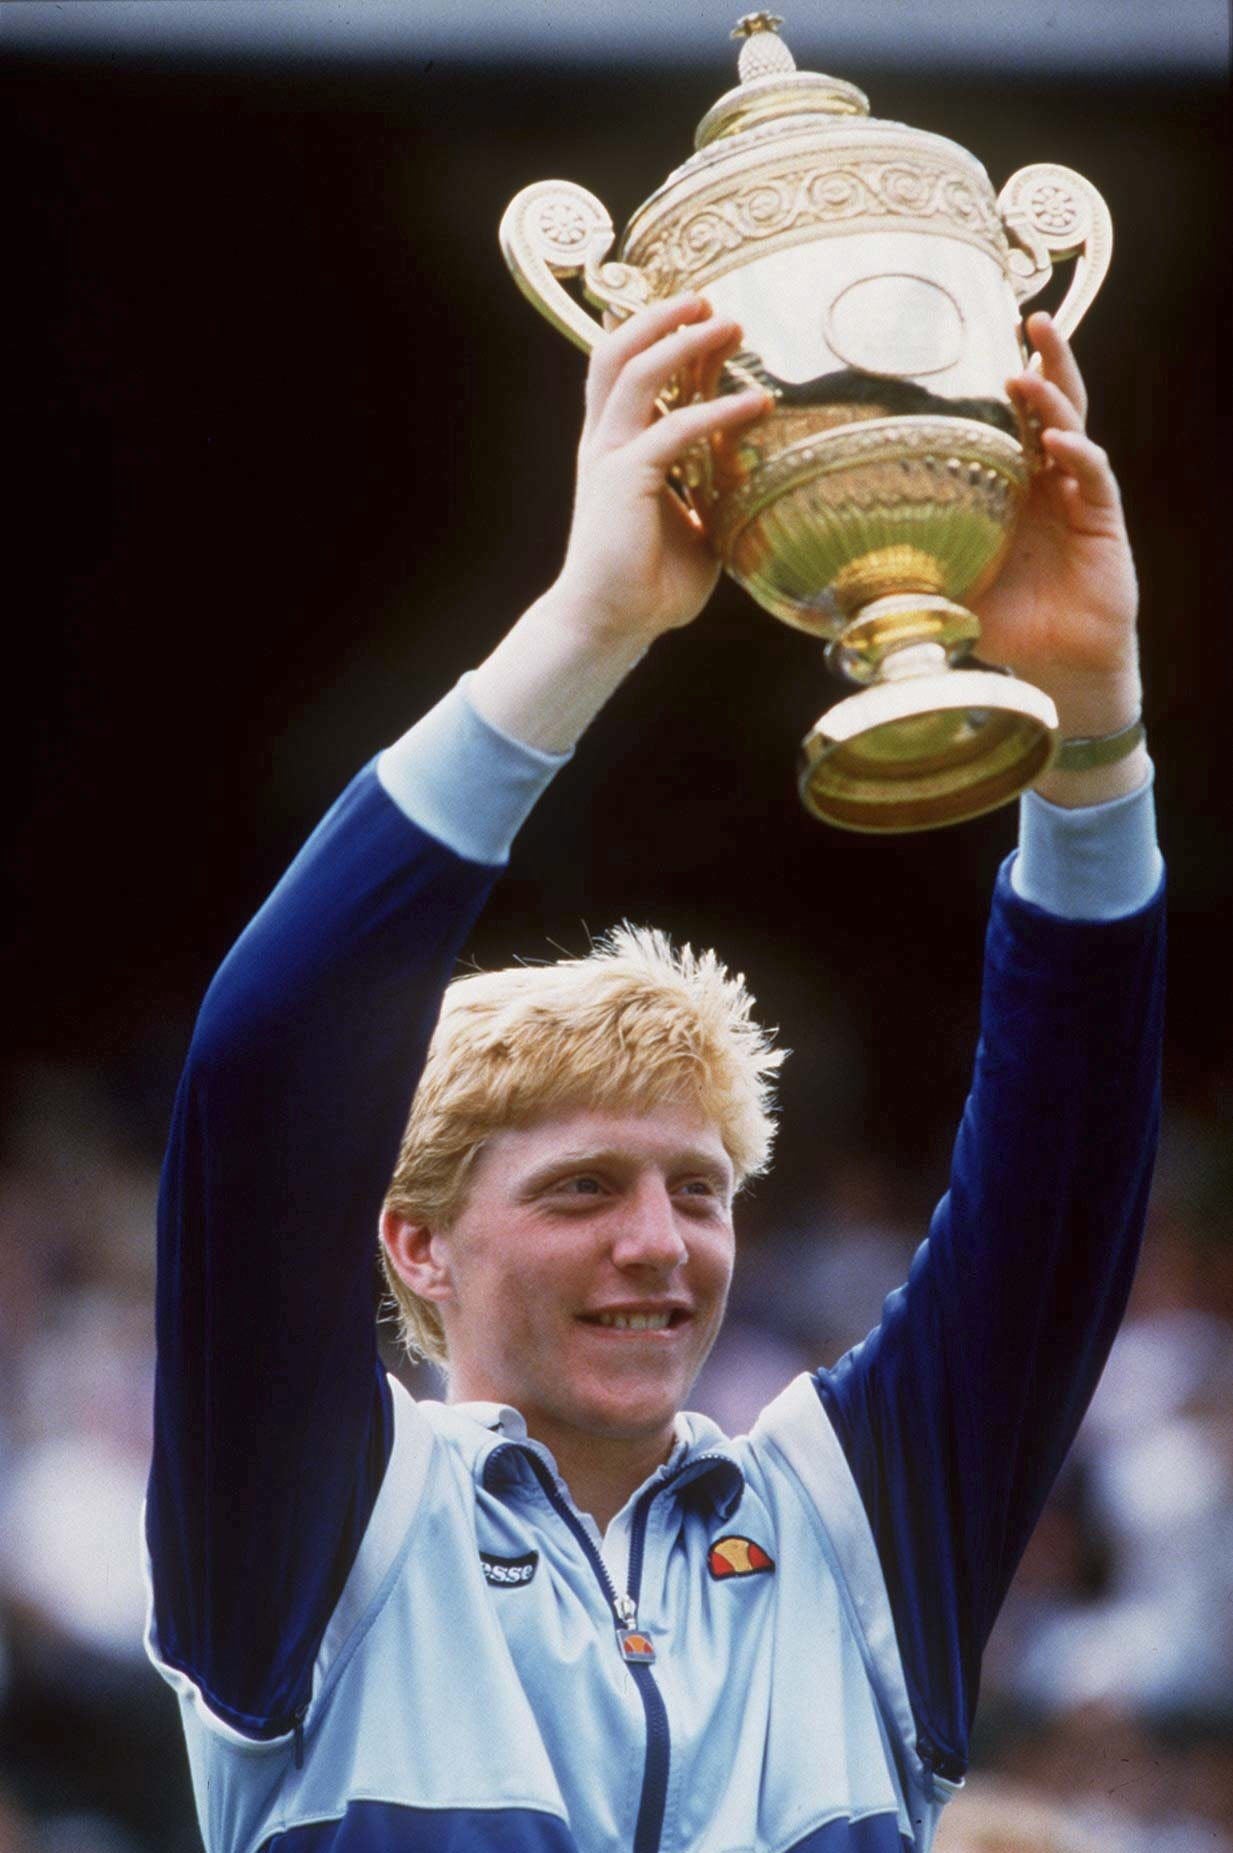 Boris Becker ganó el título individual masculino en el Campeonato de Wimbledon de 1986